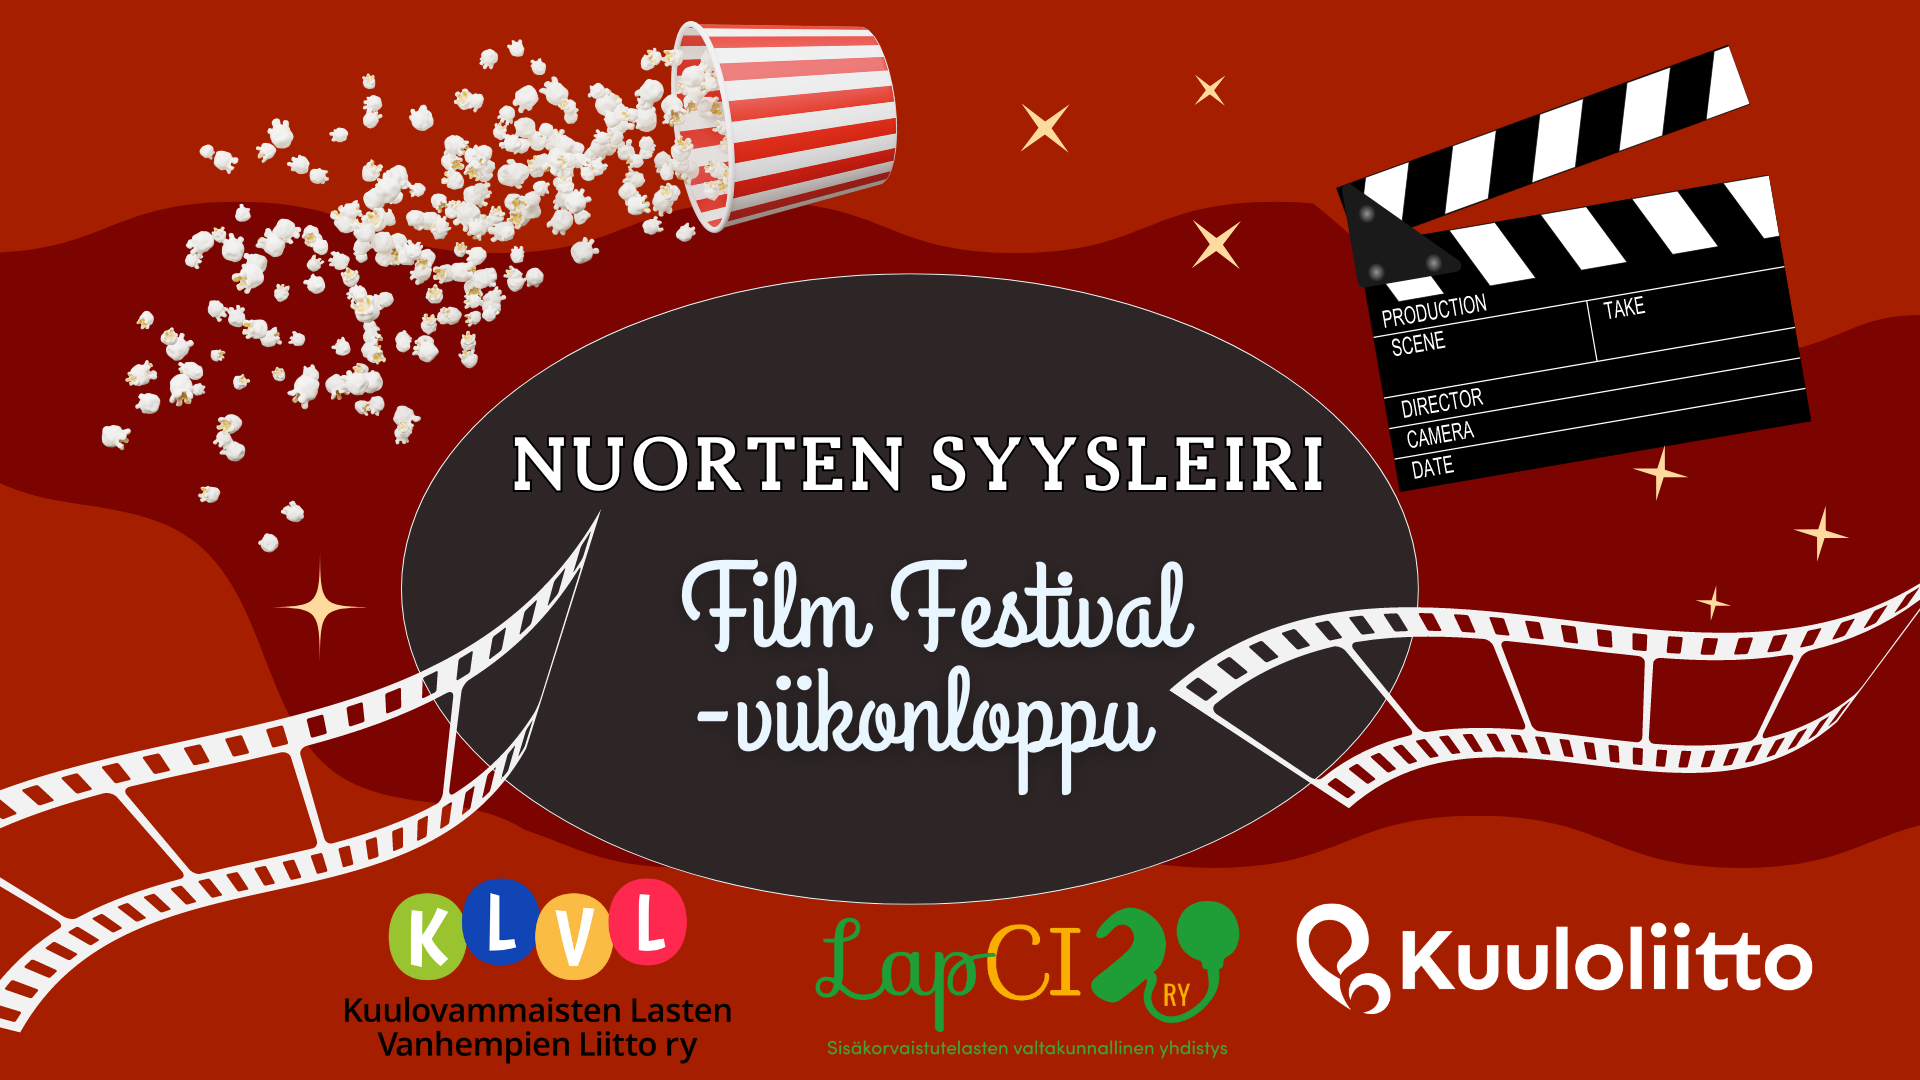 Nuorten Syysleiri, Film Festivval